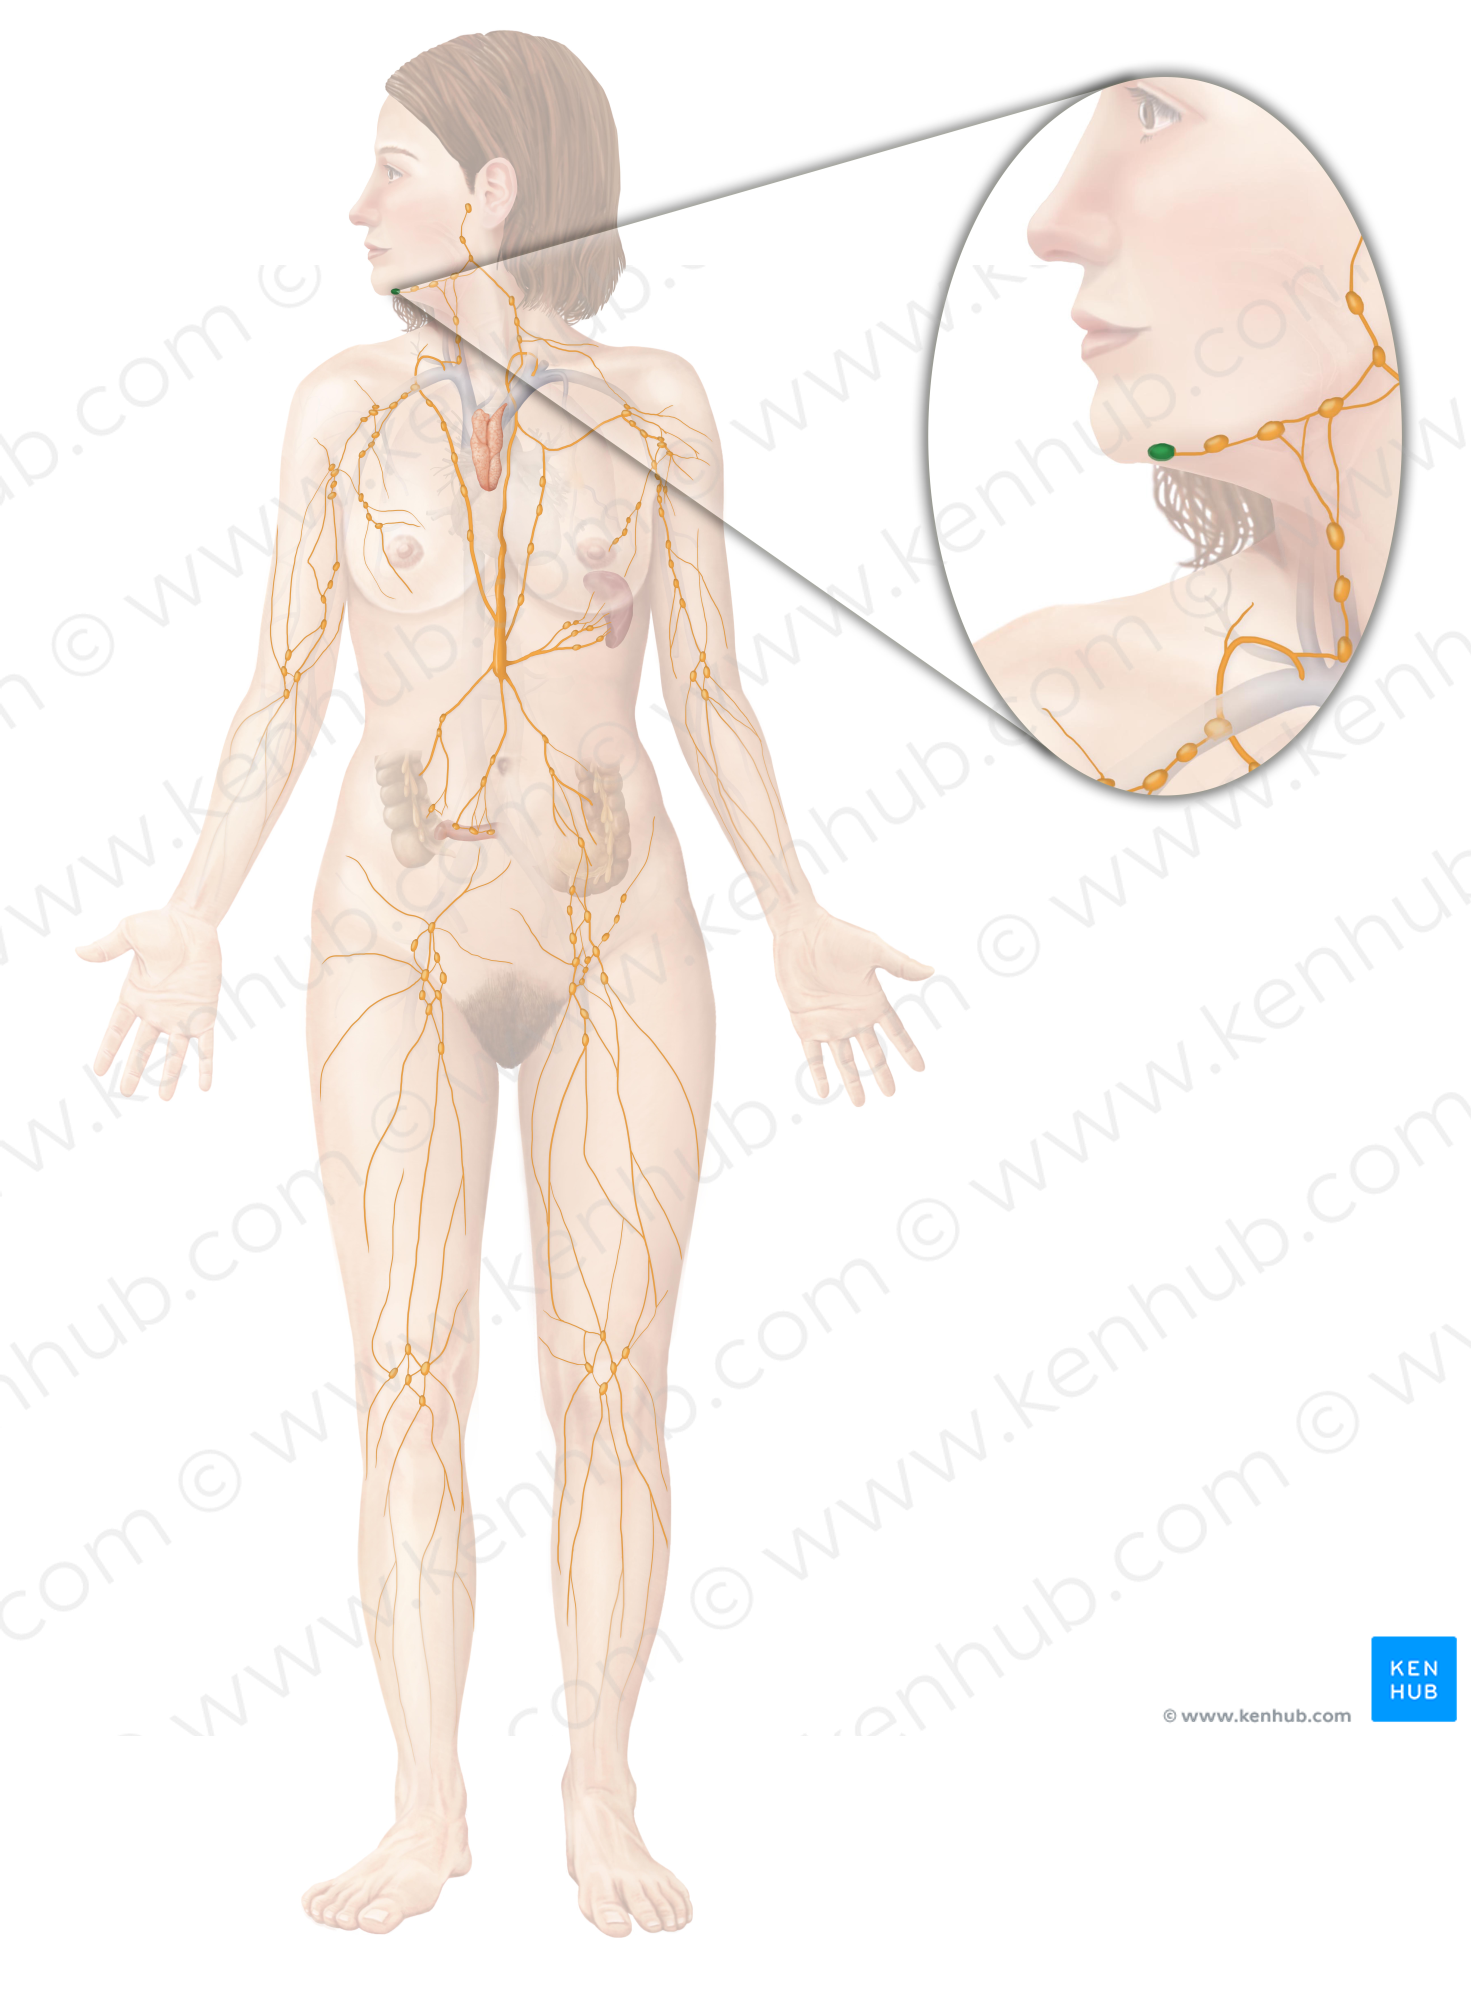 Submental lymph nodes (#6946)